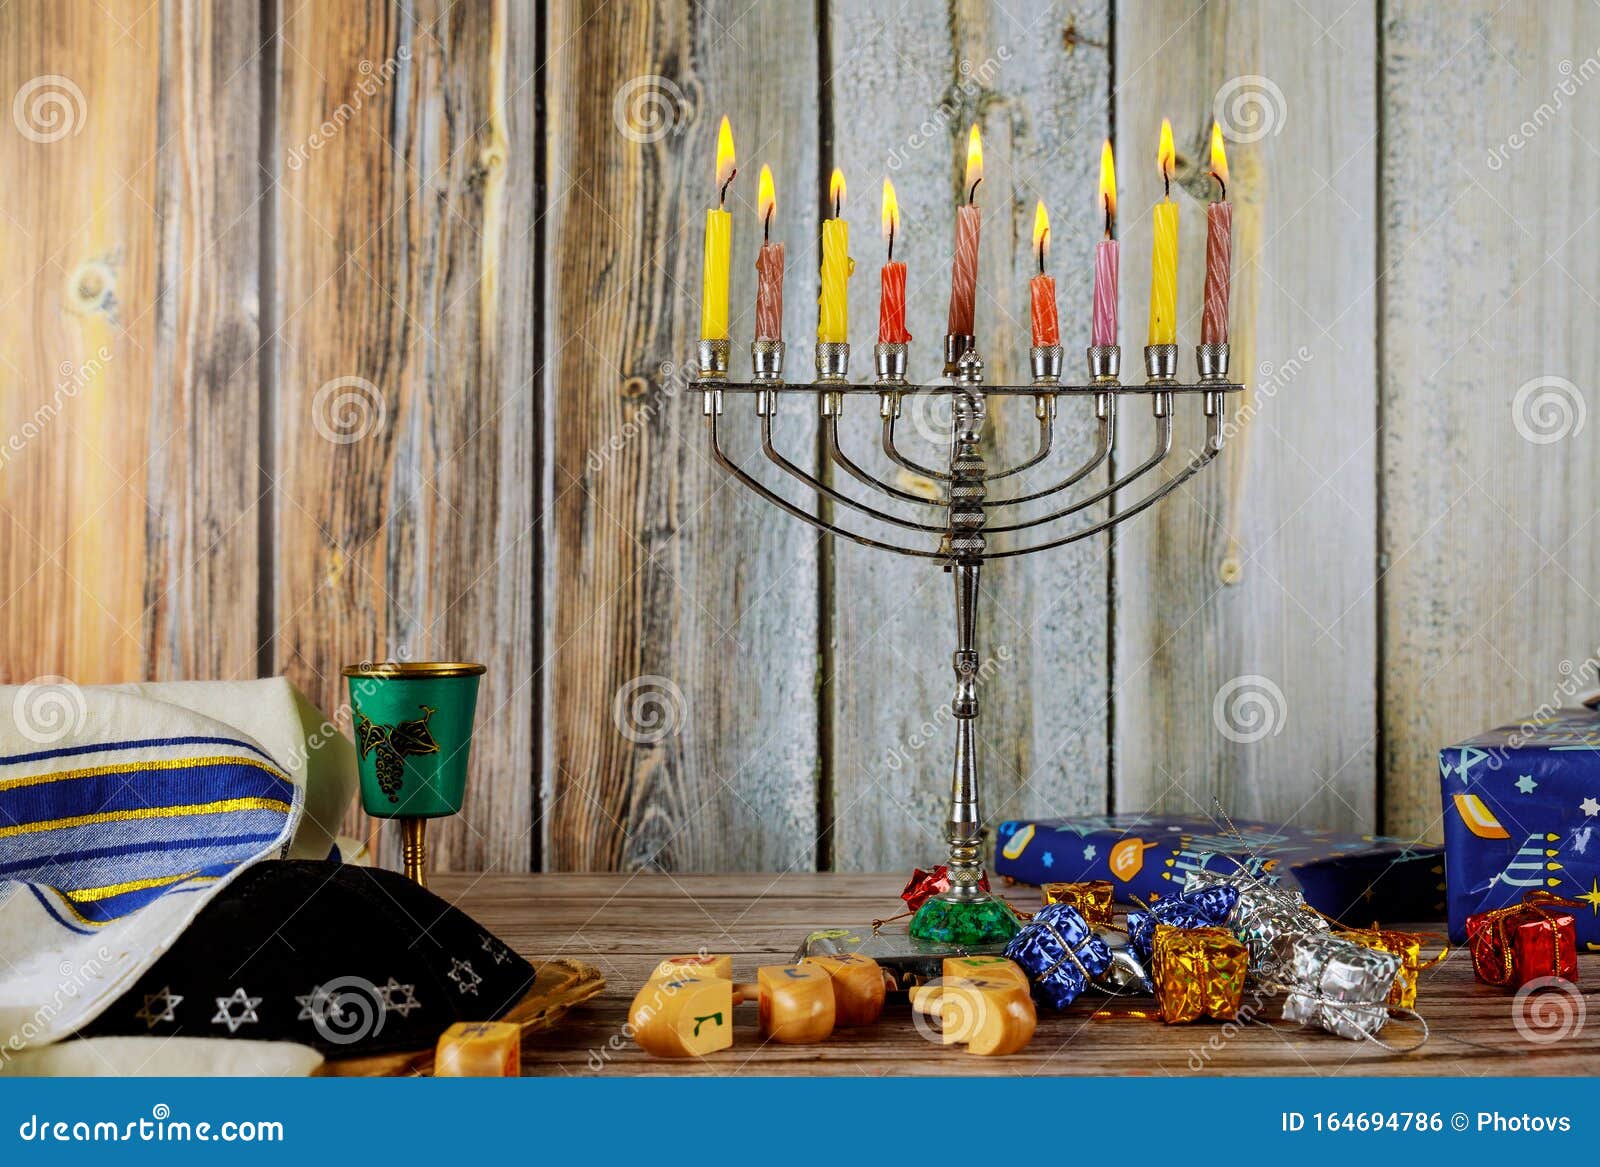 hanukkah candles, jewish holidays